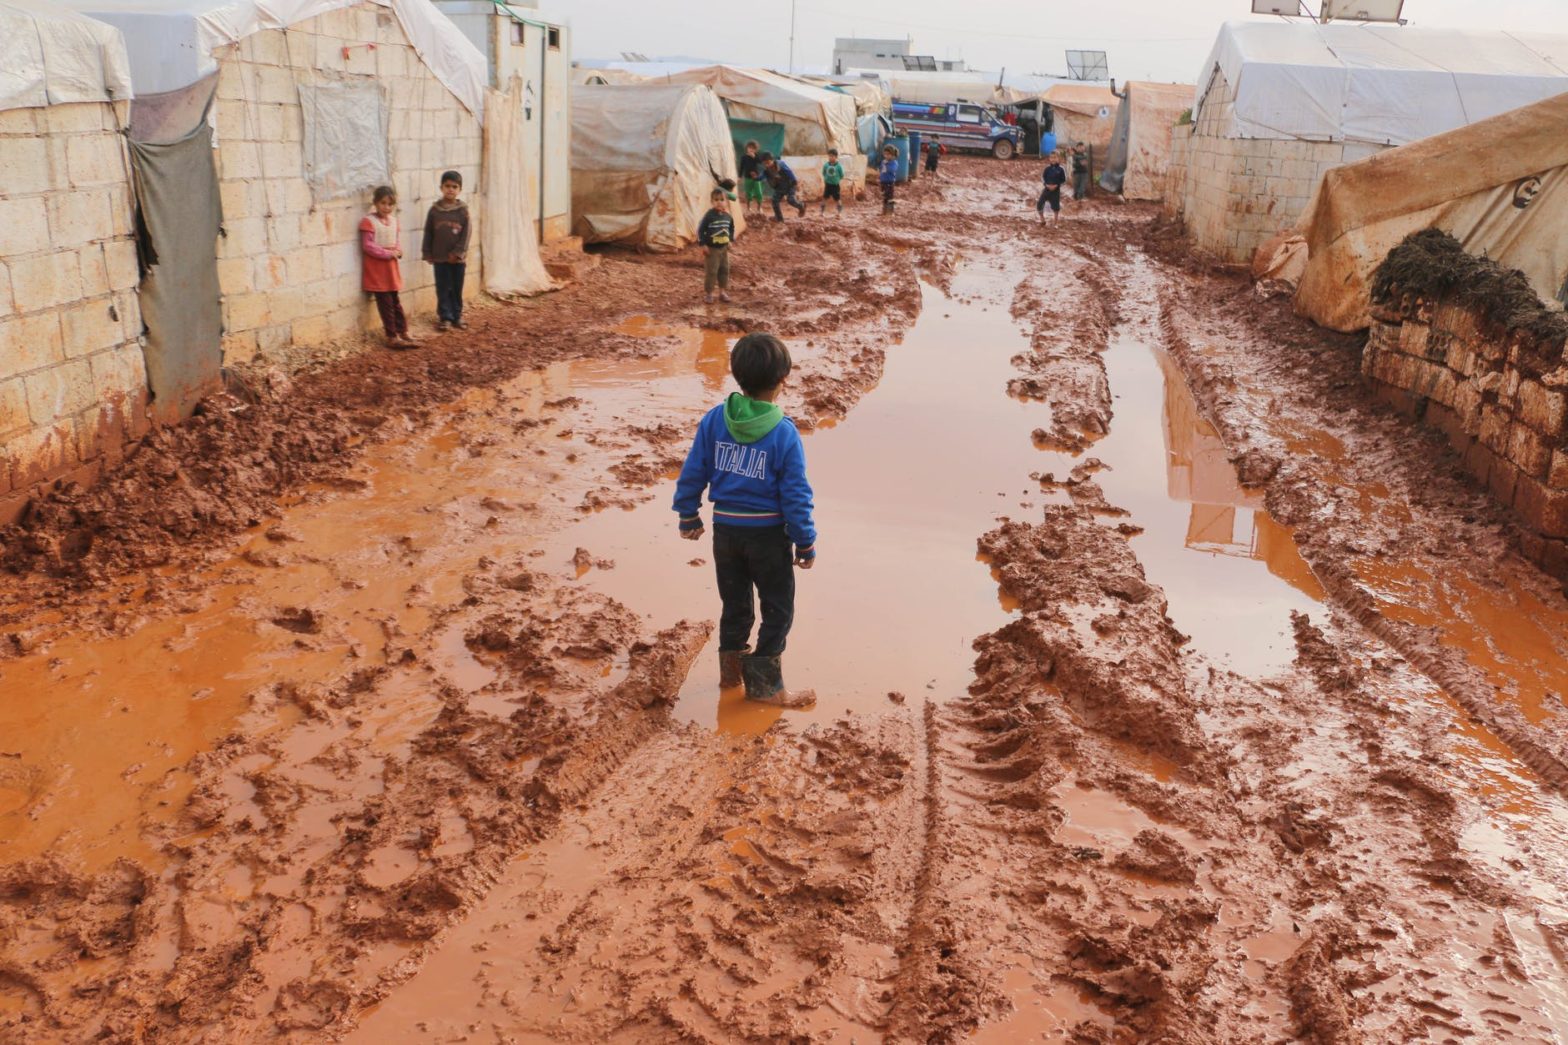 refugee kids on dirty ground